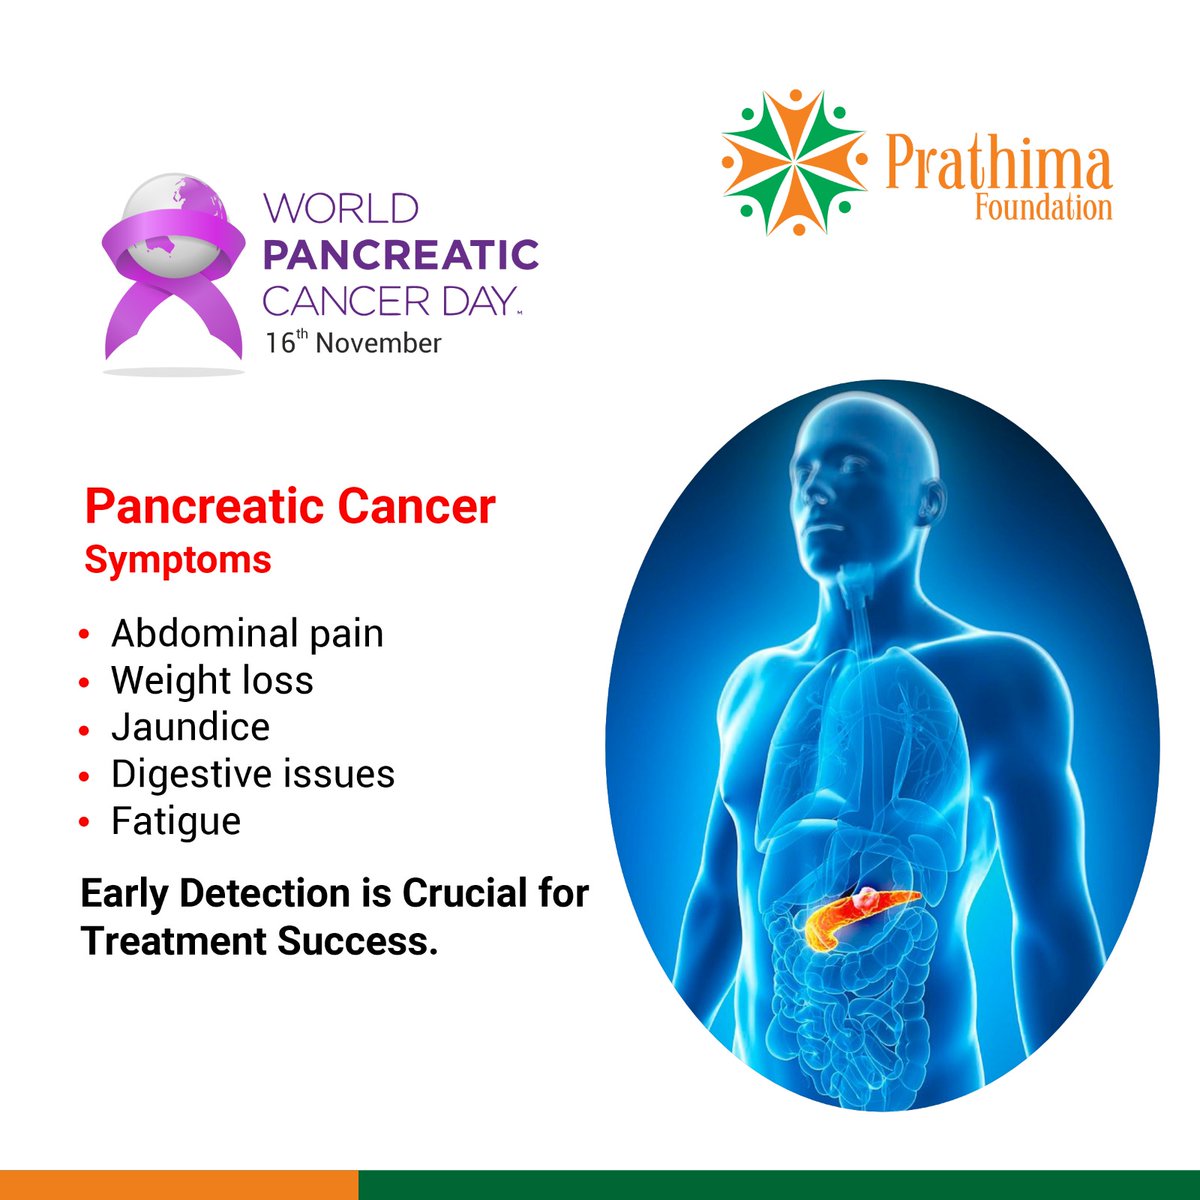 Know the Pancreatic Cancer Symptoms

#WorldPancreaticCancerDay #DemandBetter #PancreaticCancerAwareness #WageHope #PurpleHope #PancreaticCancerWarriors #FightPancreaticCancer #EarlyDetectionSavesLives #PancreaticCancerResearch #PurpleRibbon #prathimafpundation #prathima #PF